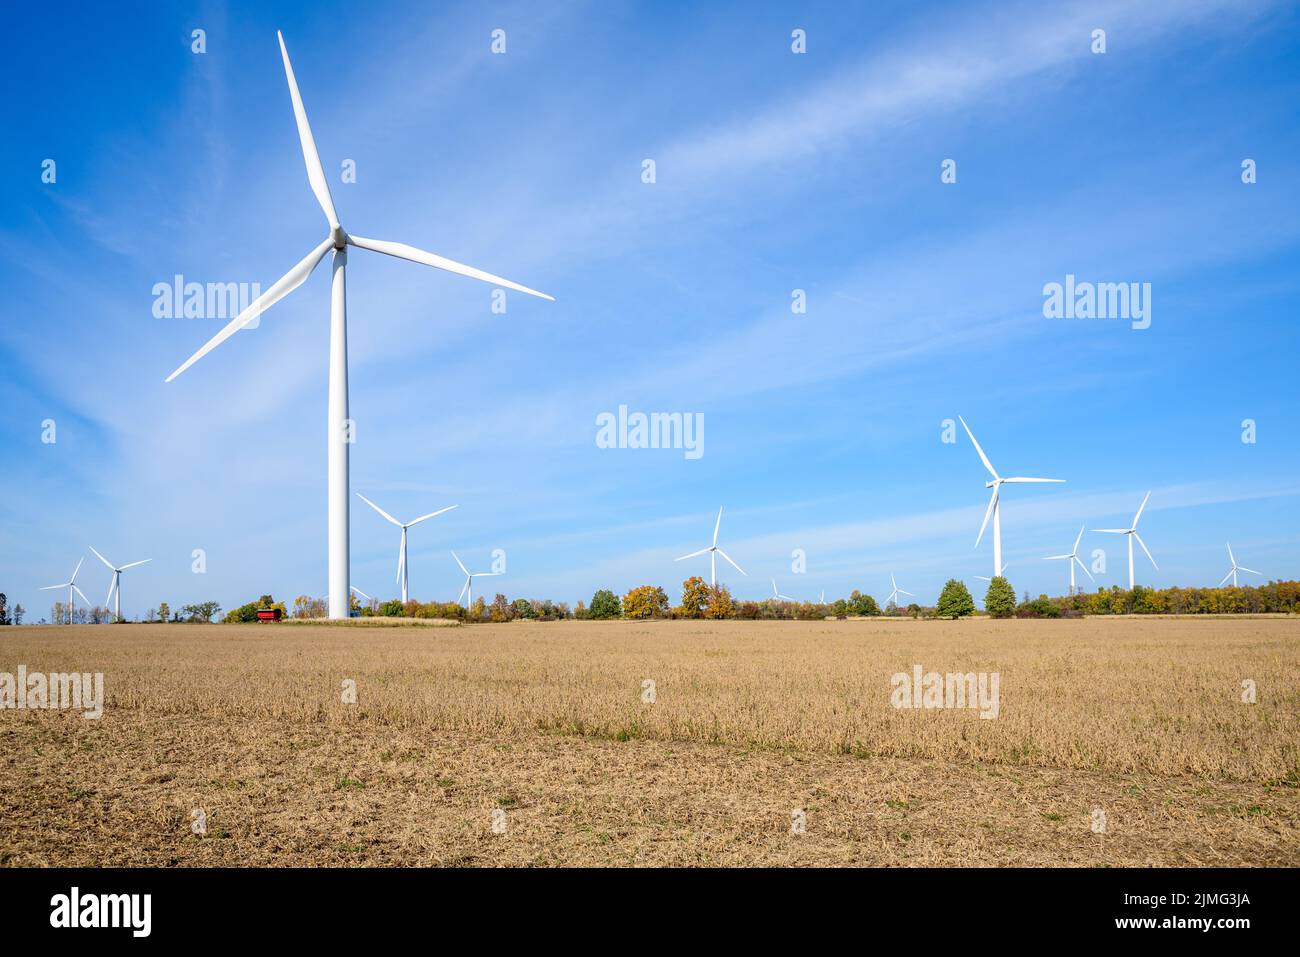 Wind farm in a rural landscape under blue sky in autumn. Copy space. Stock Photo